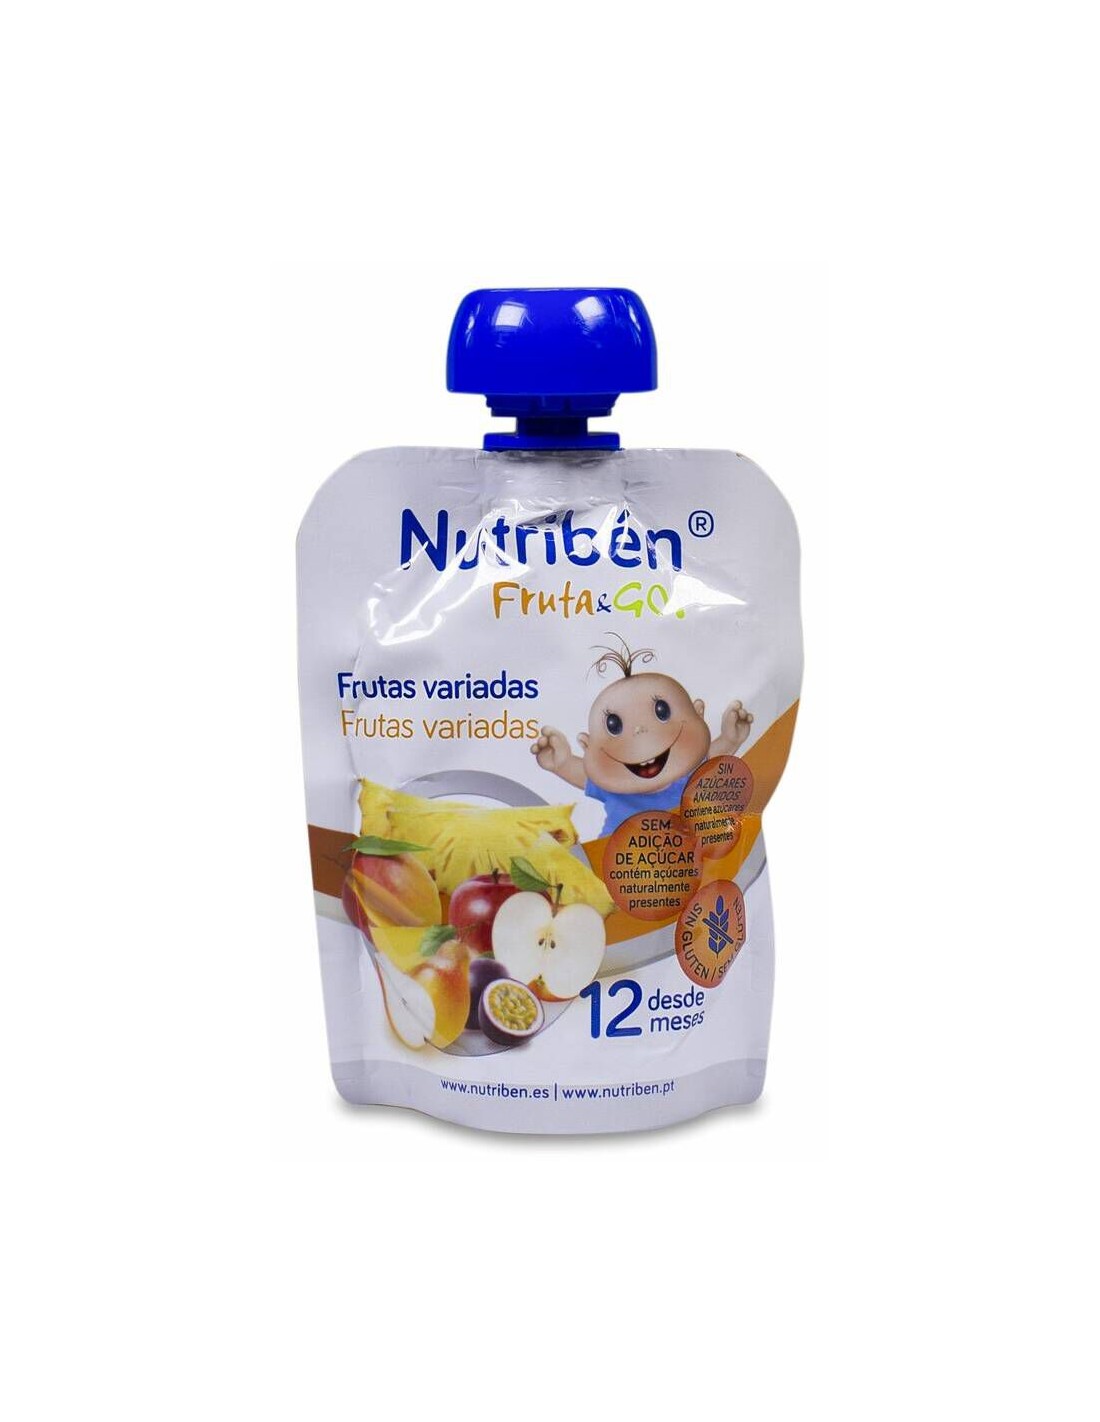 Nutriben potitos frutas variadas 1 envase 235 g